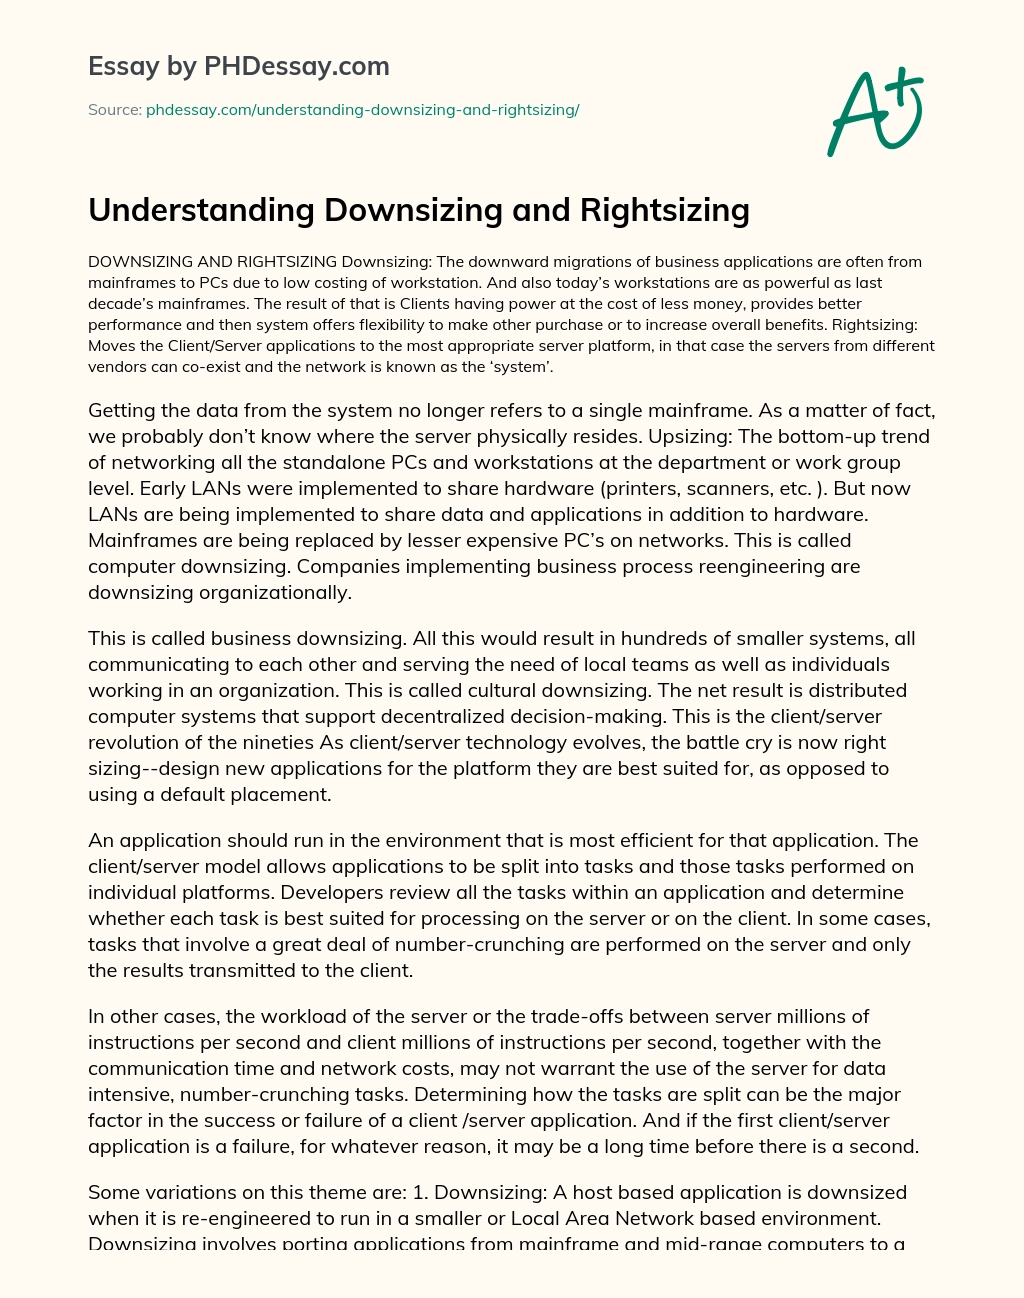 Understanding Downsizing and Rightsizing essay